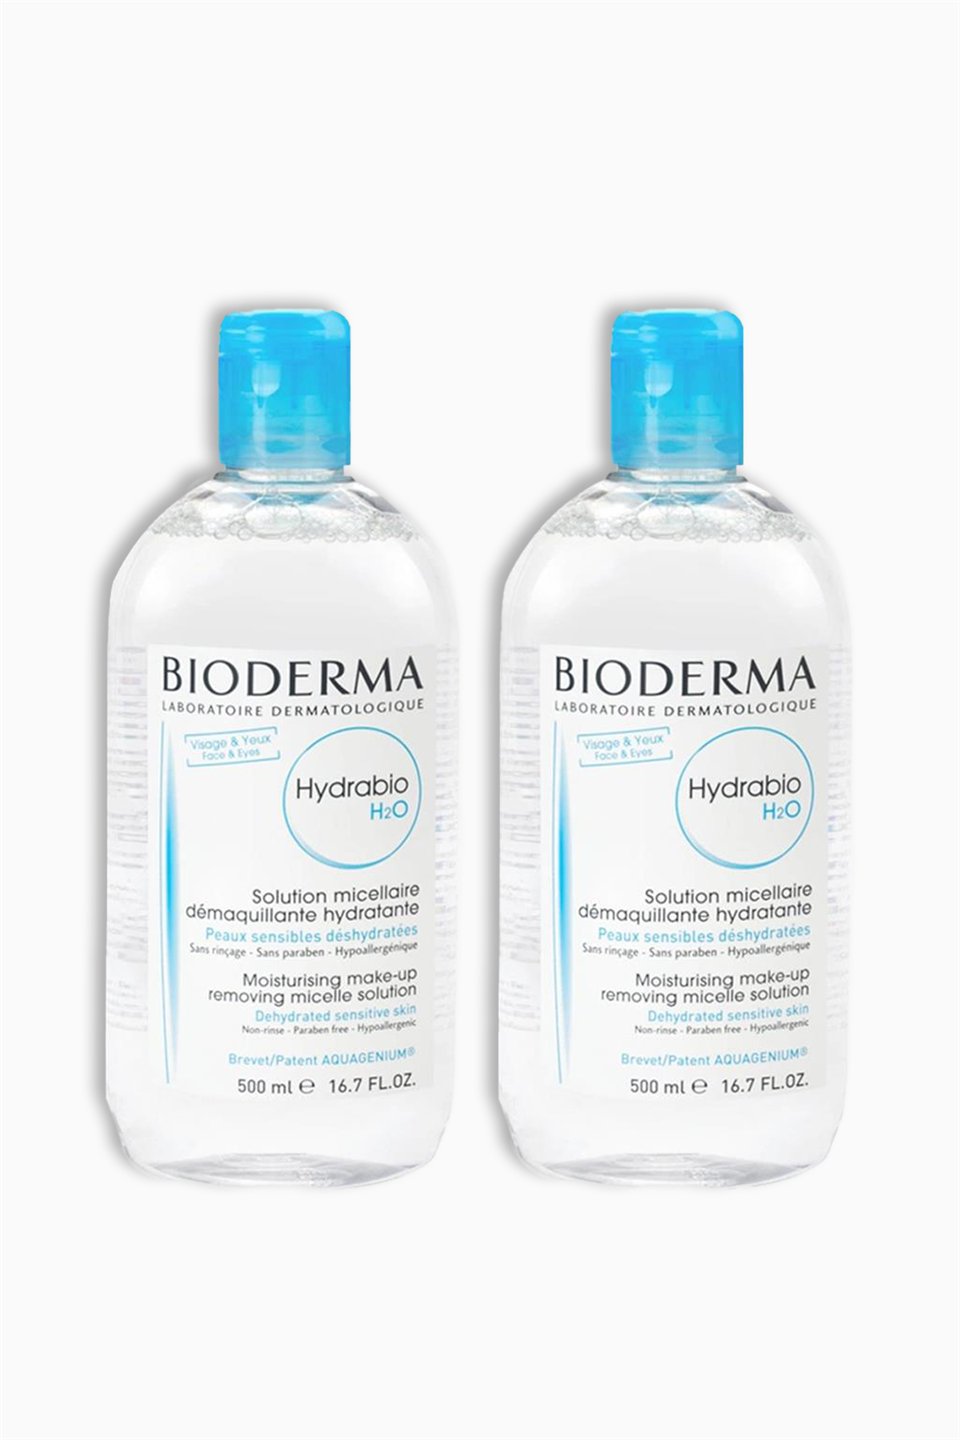 Bioderma Hydrabio H2O 500 ml - İkili Paket Özel Fiyat Fiyatı |  Farmakozmetika